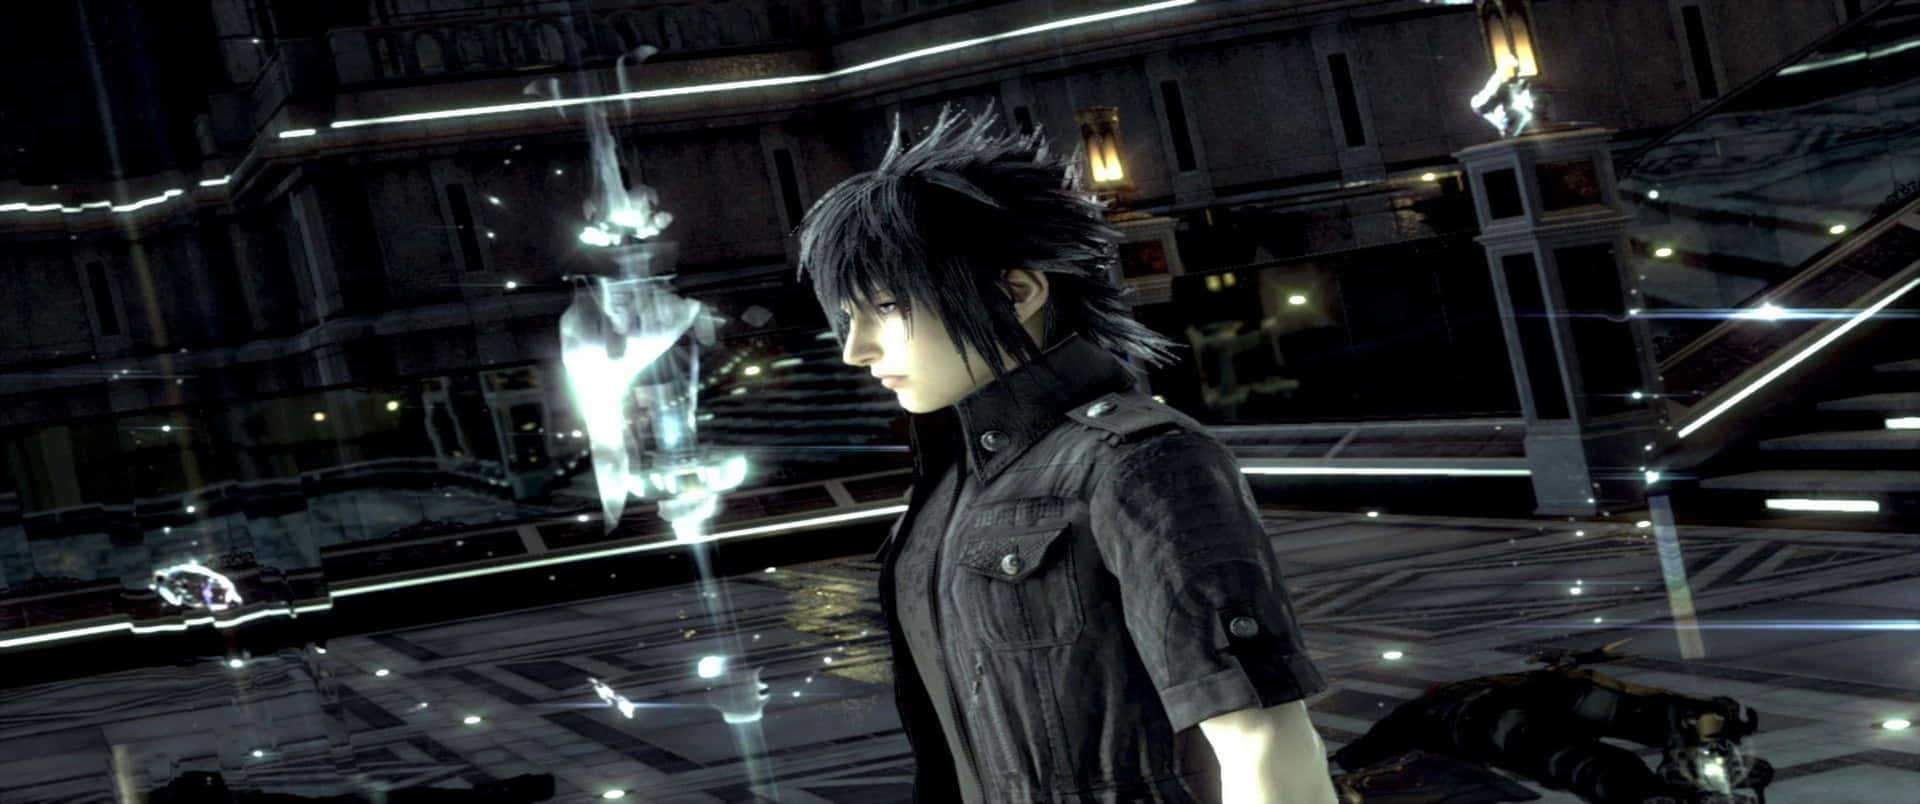 Final Fantasy Vii Screenshot